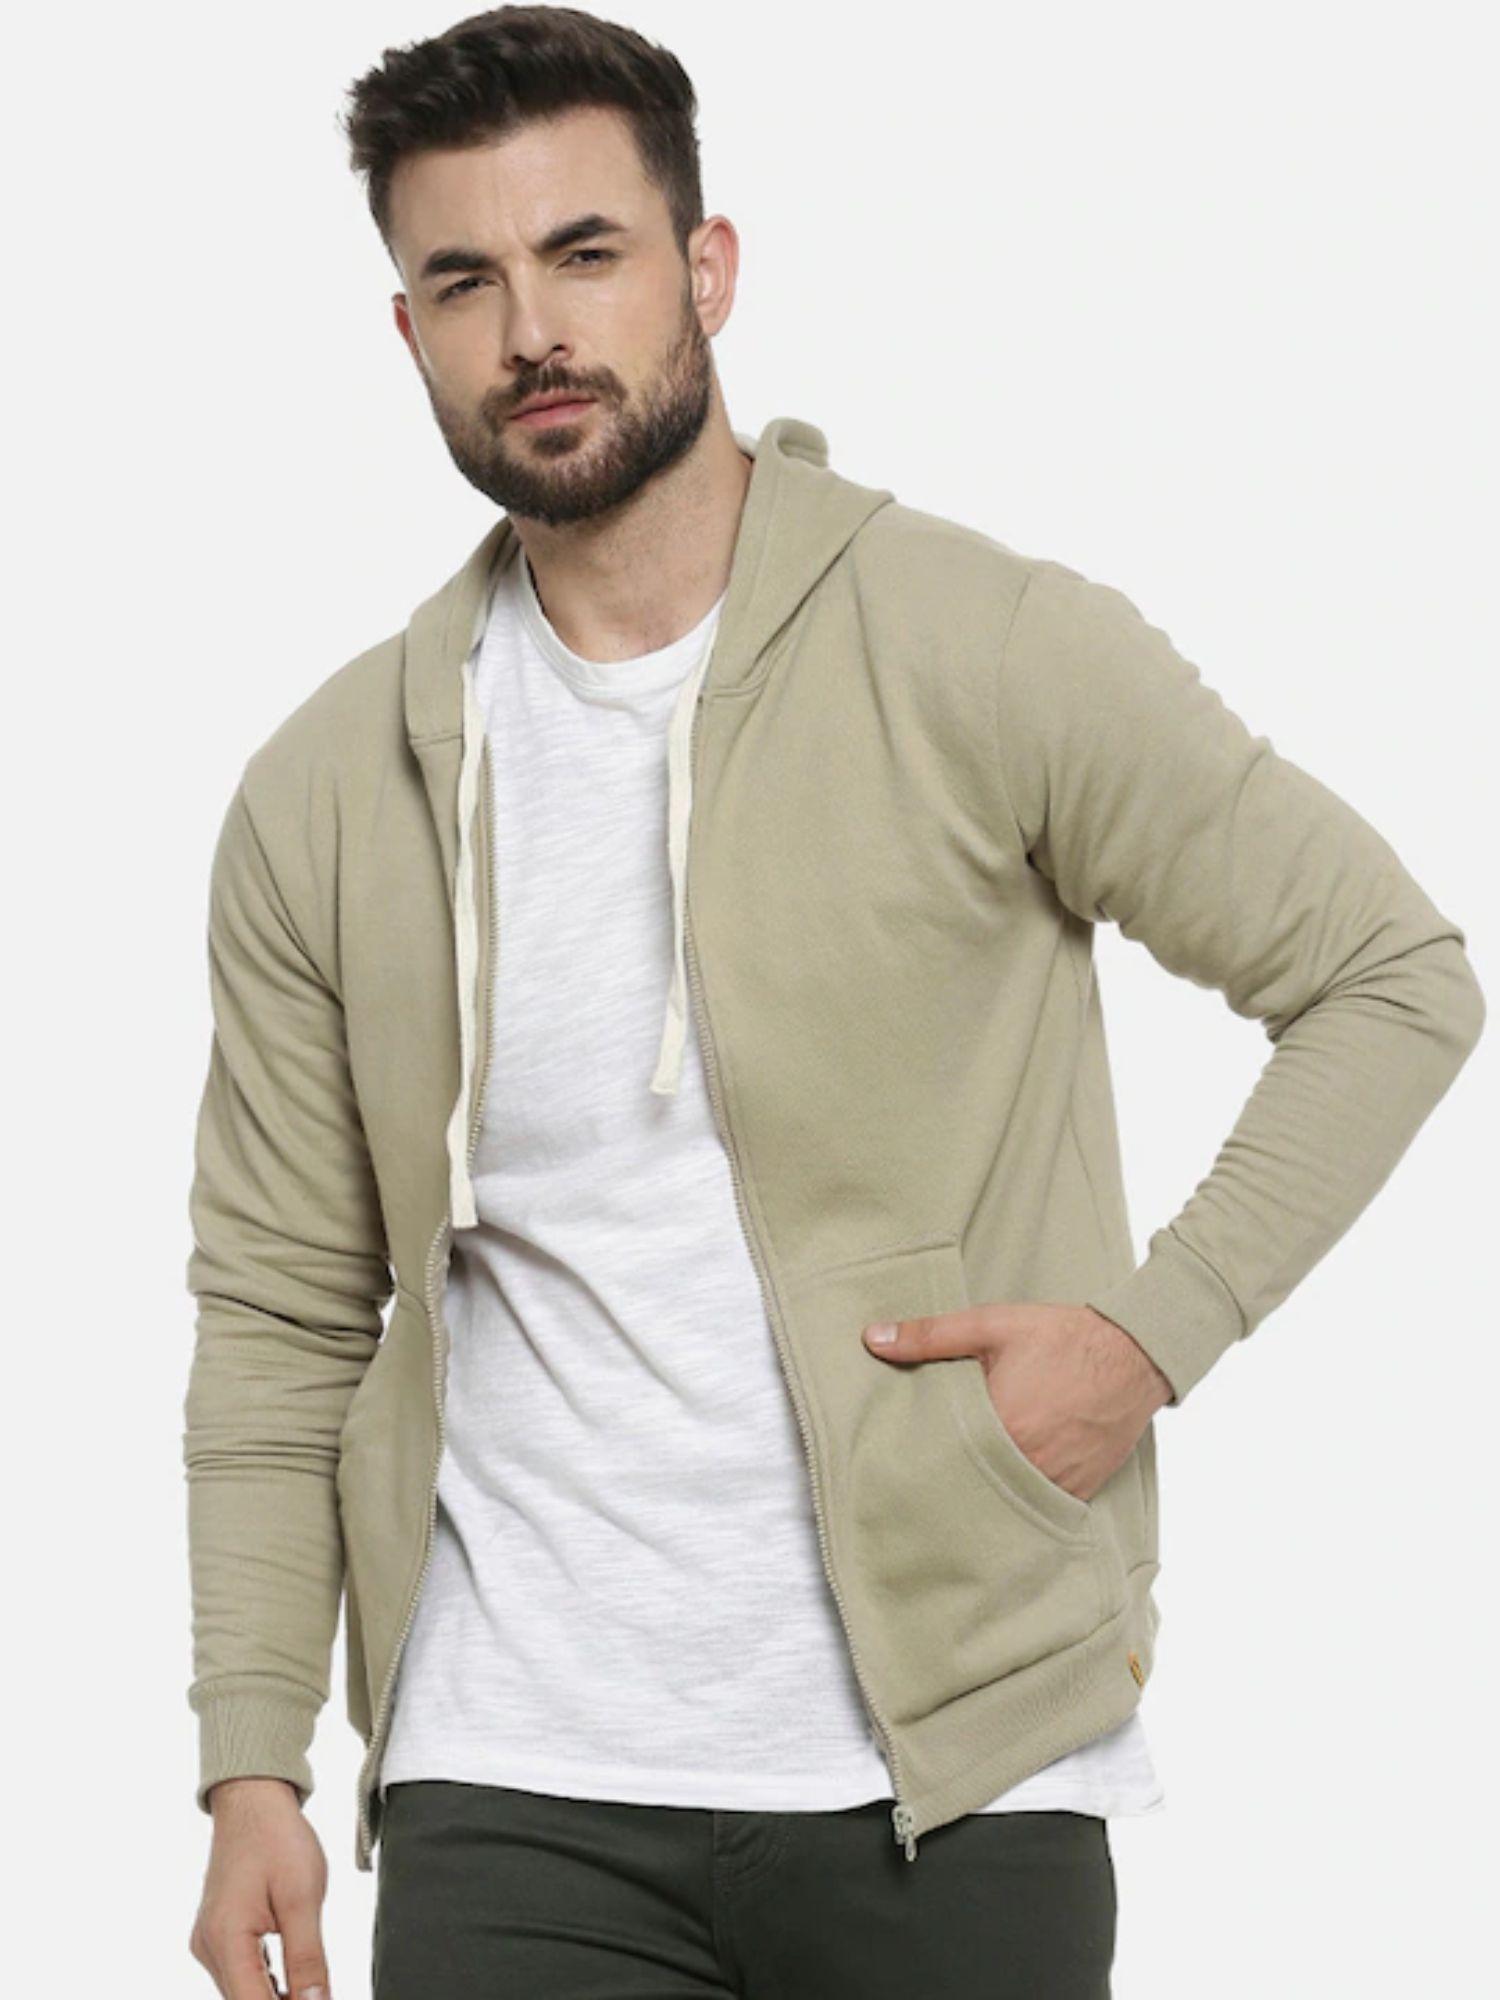 Men Zipper Solid Full Sleeve Stylish Casual Hooded Sweatshirts